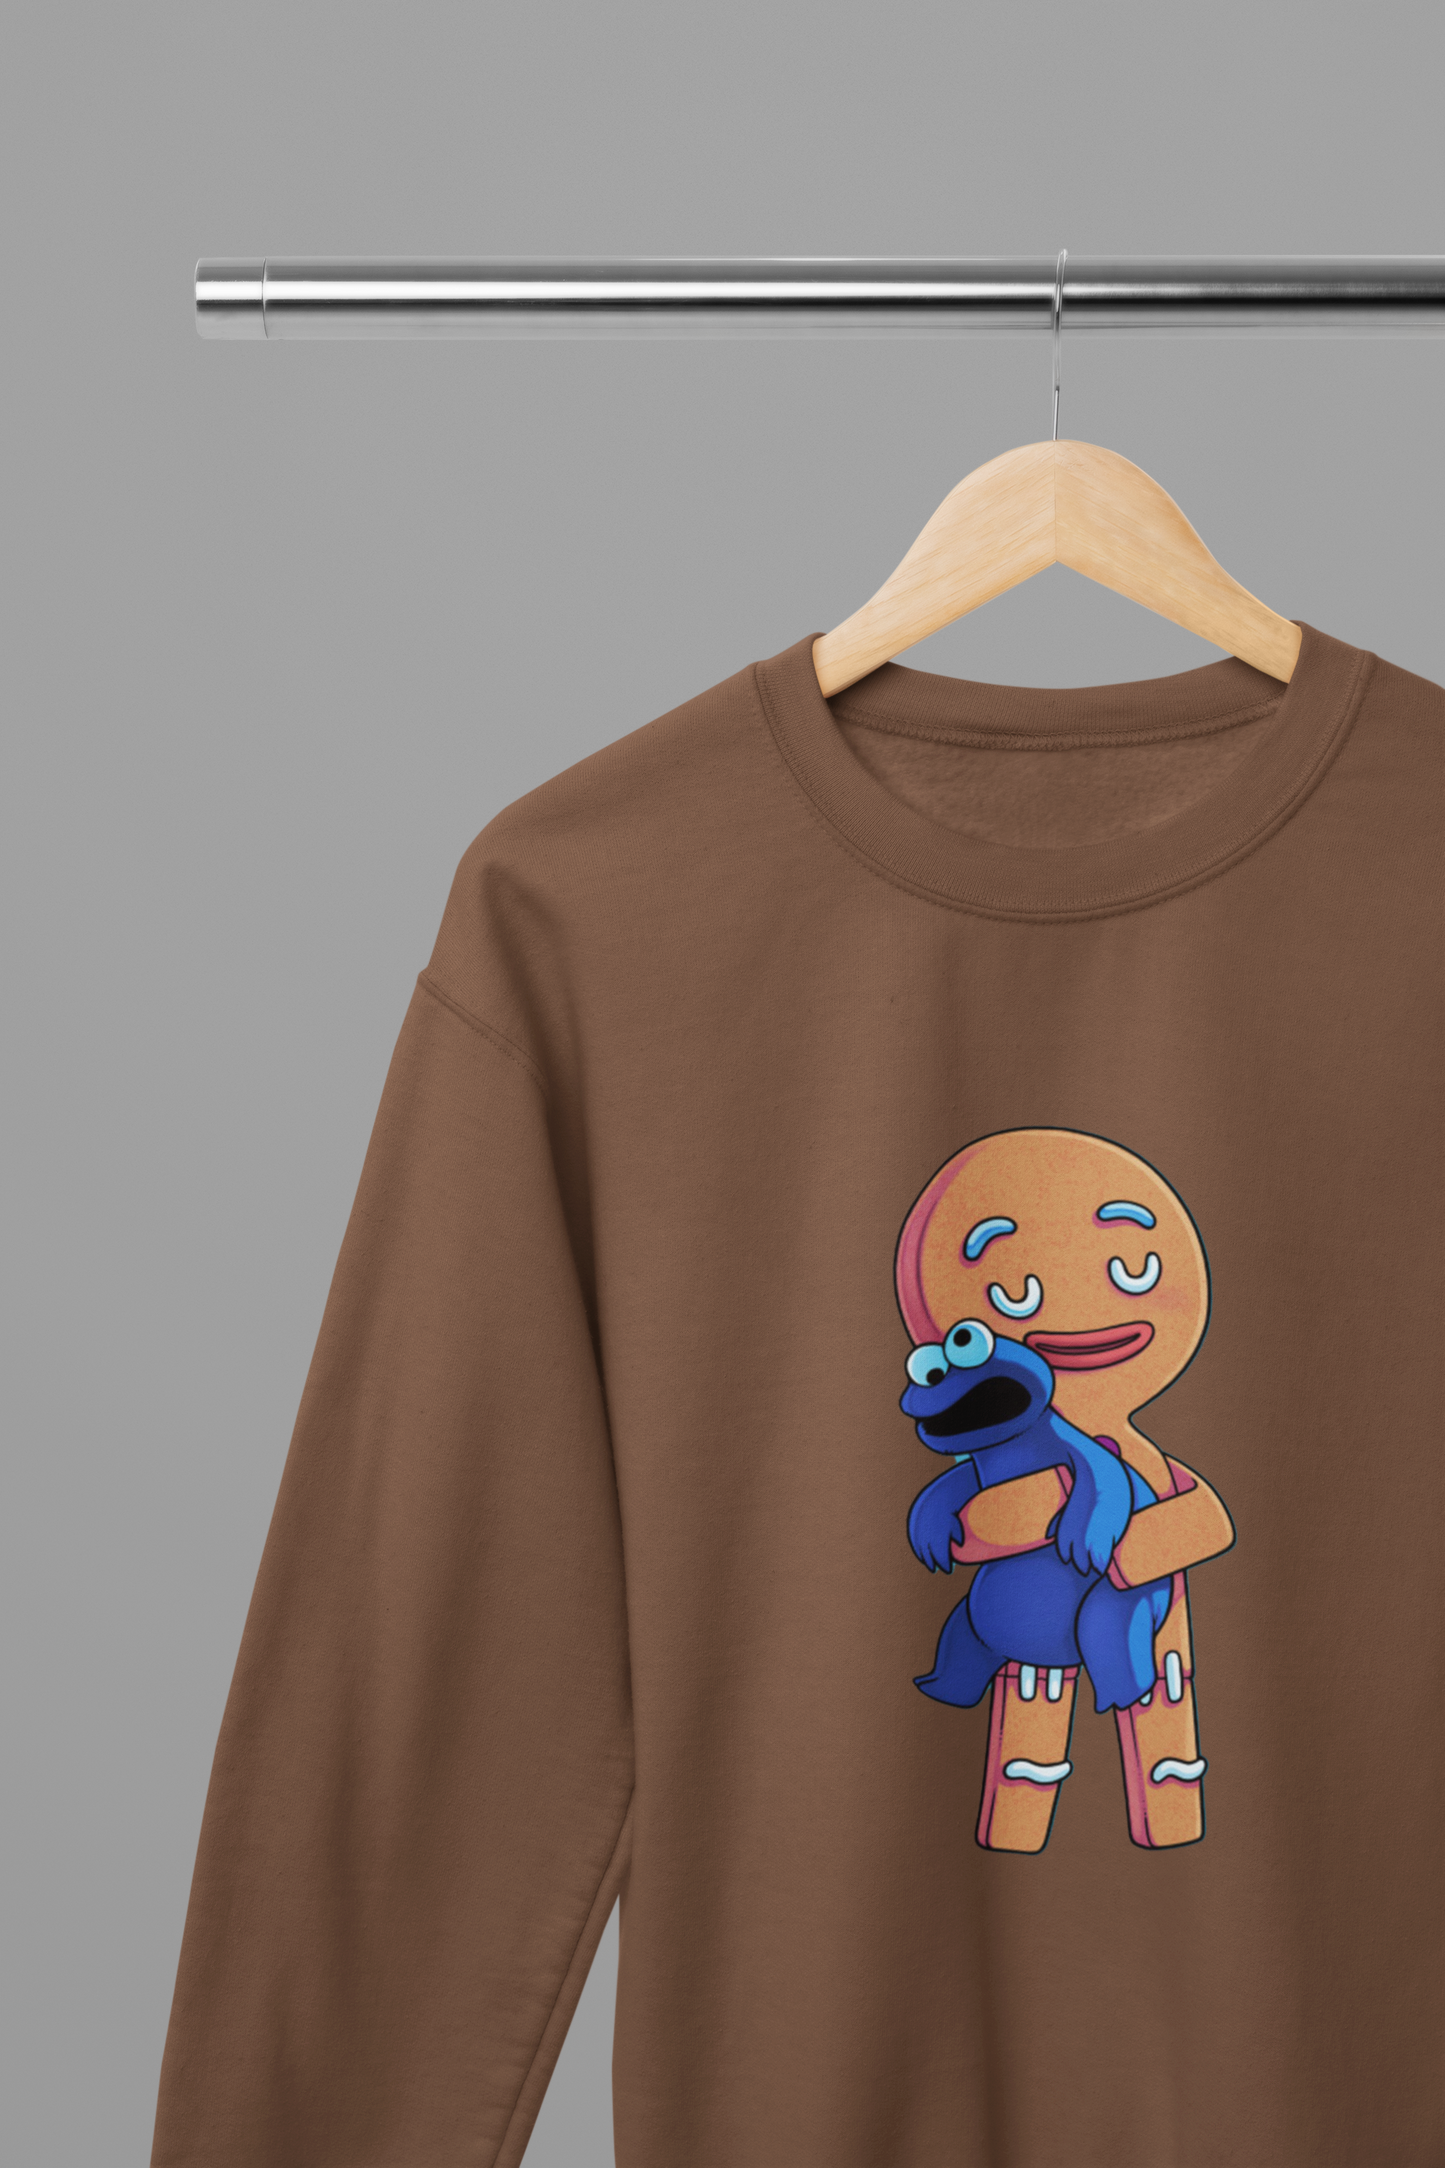 Gingerbread Man Cookie Monster Lover Chucky Childs Play T-Shirt/Sweatshirt